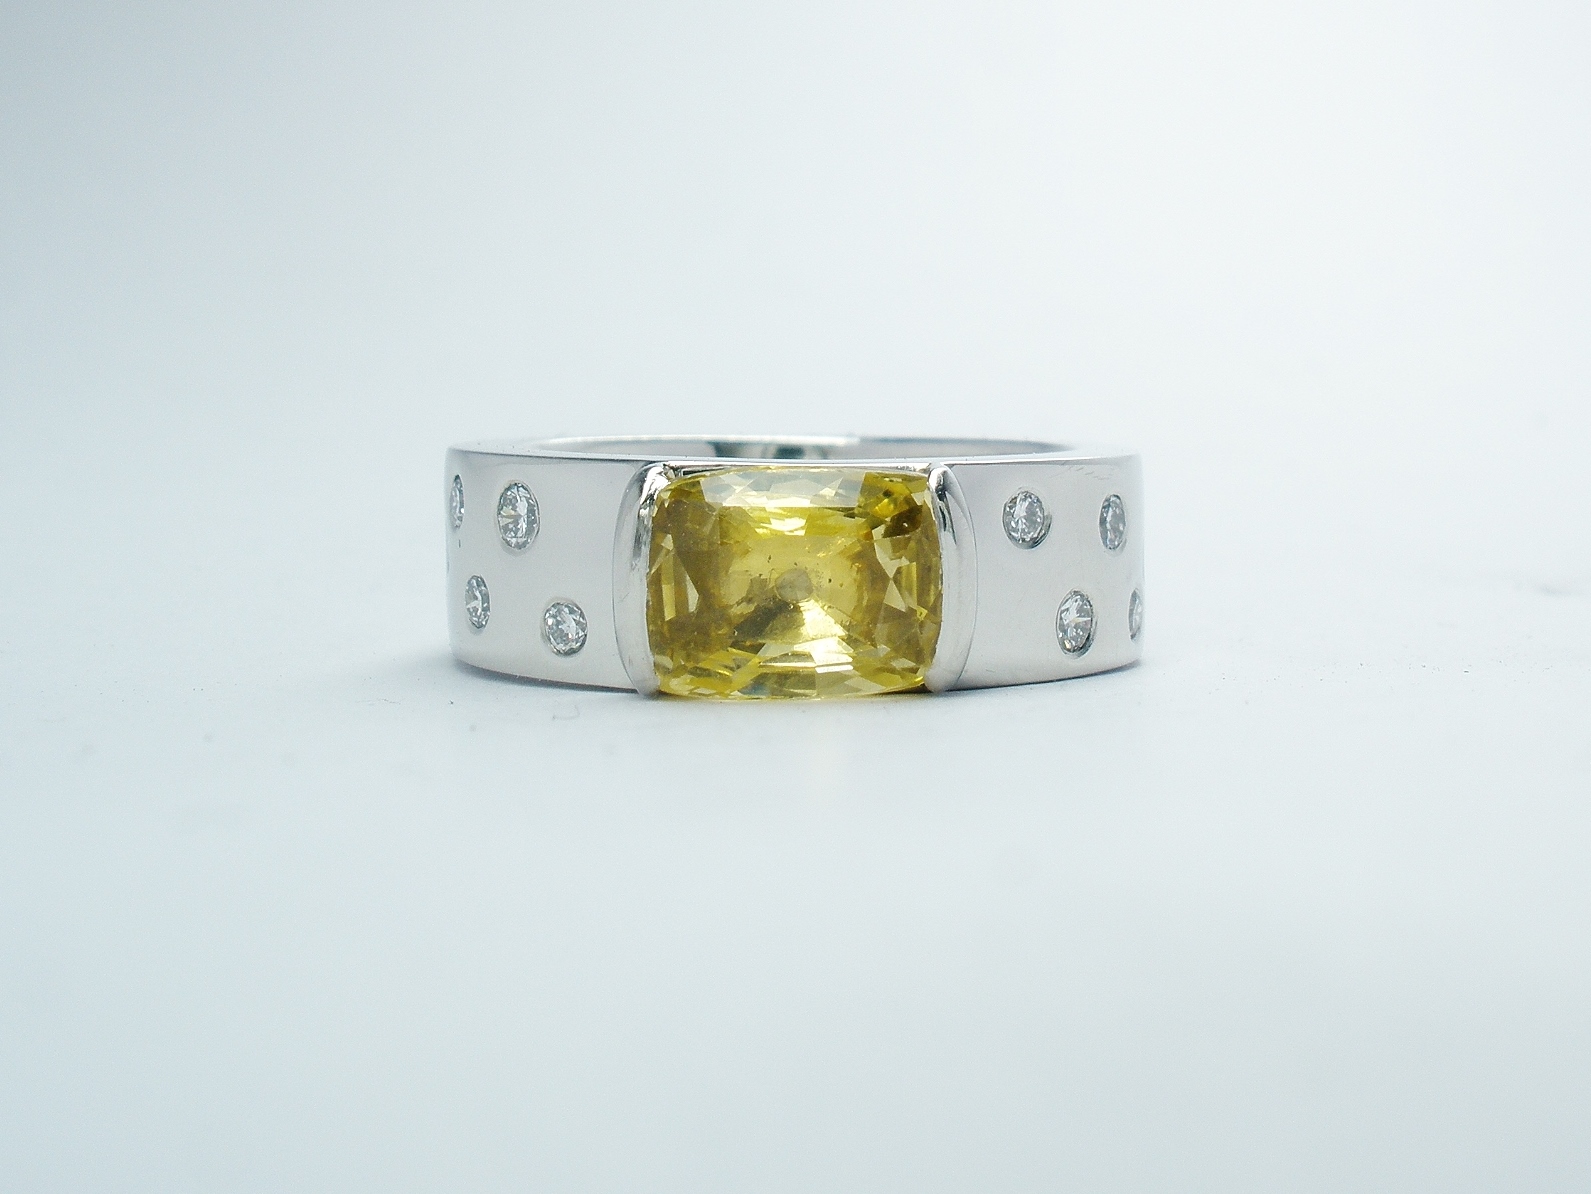 A rectangular cushion cut yellow sapphire and flush set round brilliant cut diamonds mounted in platinum.